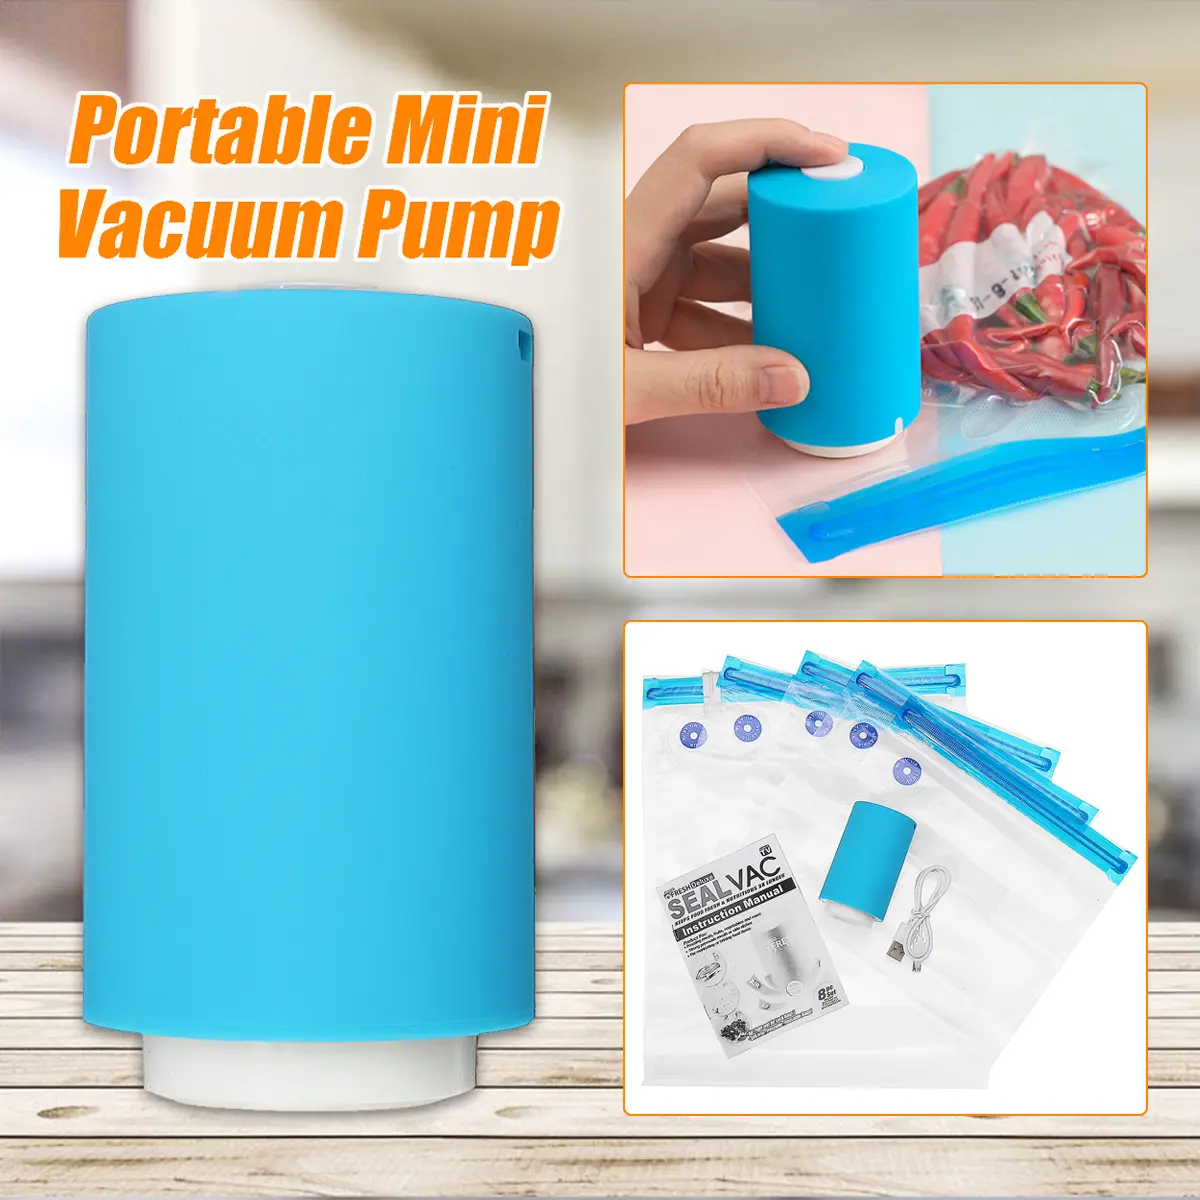 A A USB Mini Portable Automatic Electric Compression Vacuum Pump Household